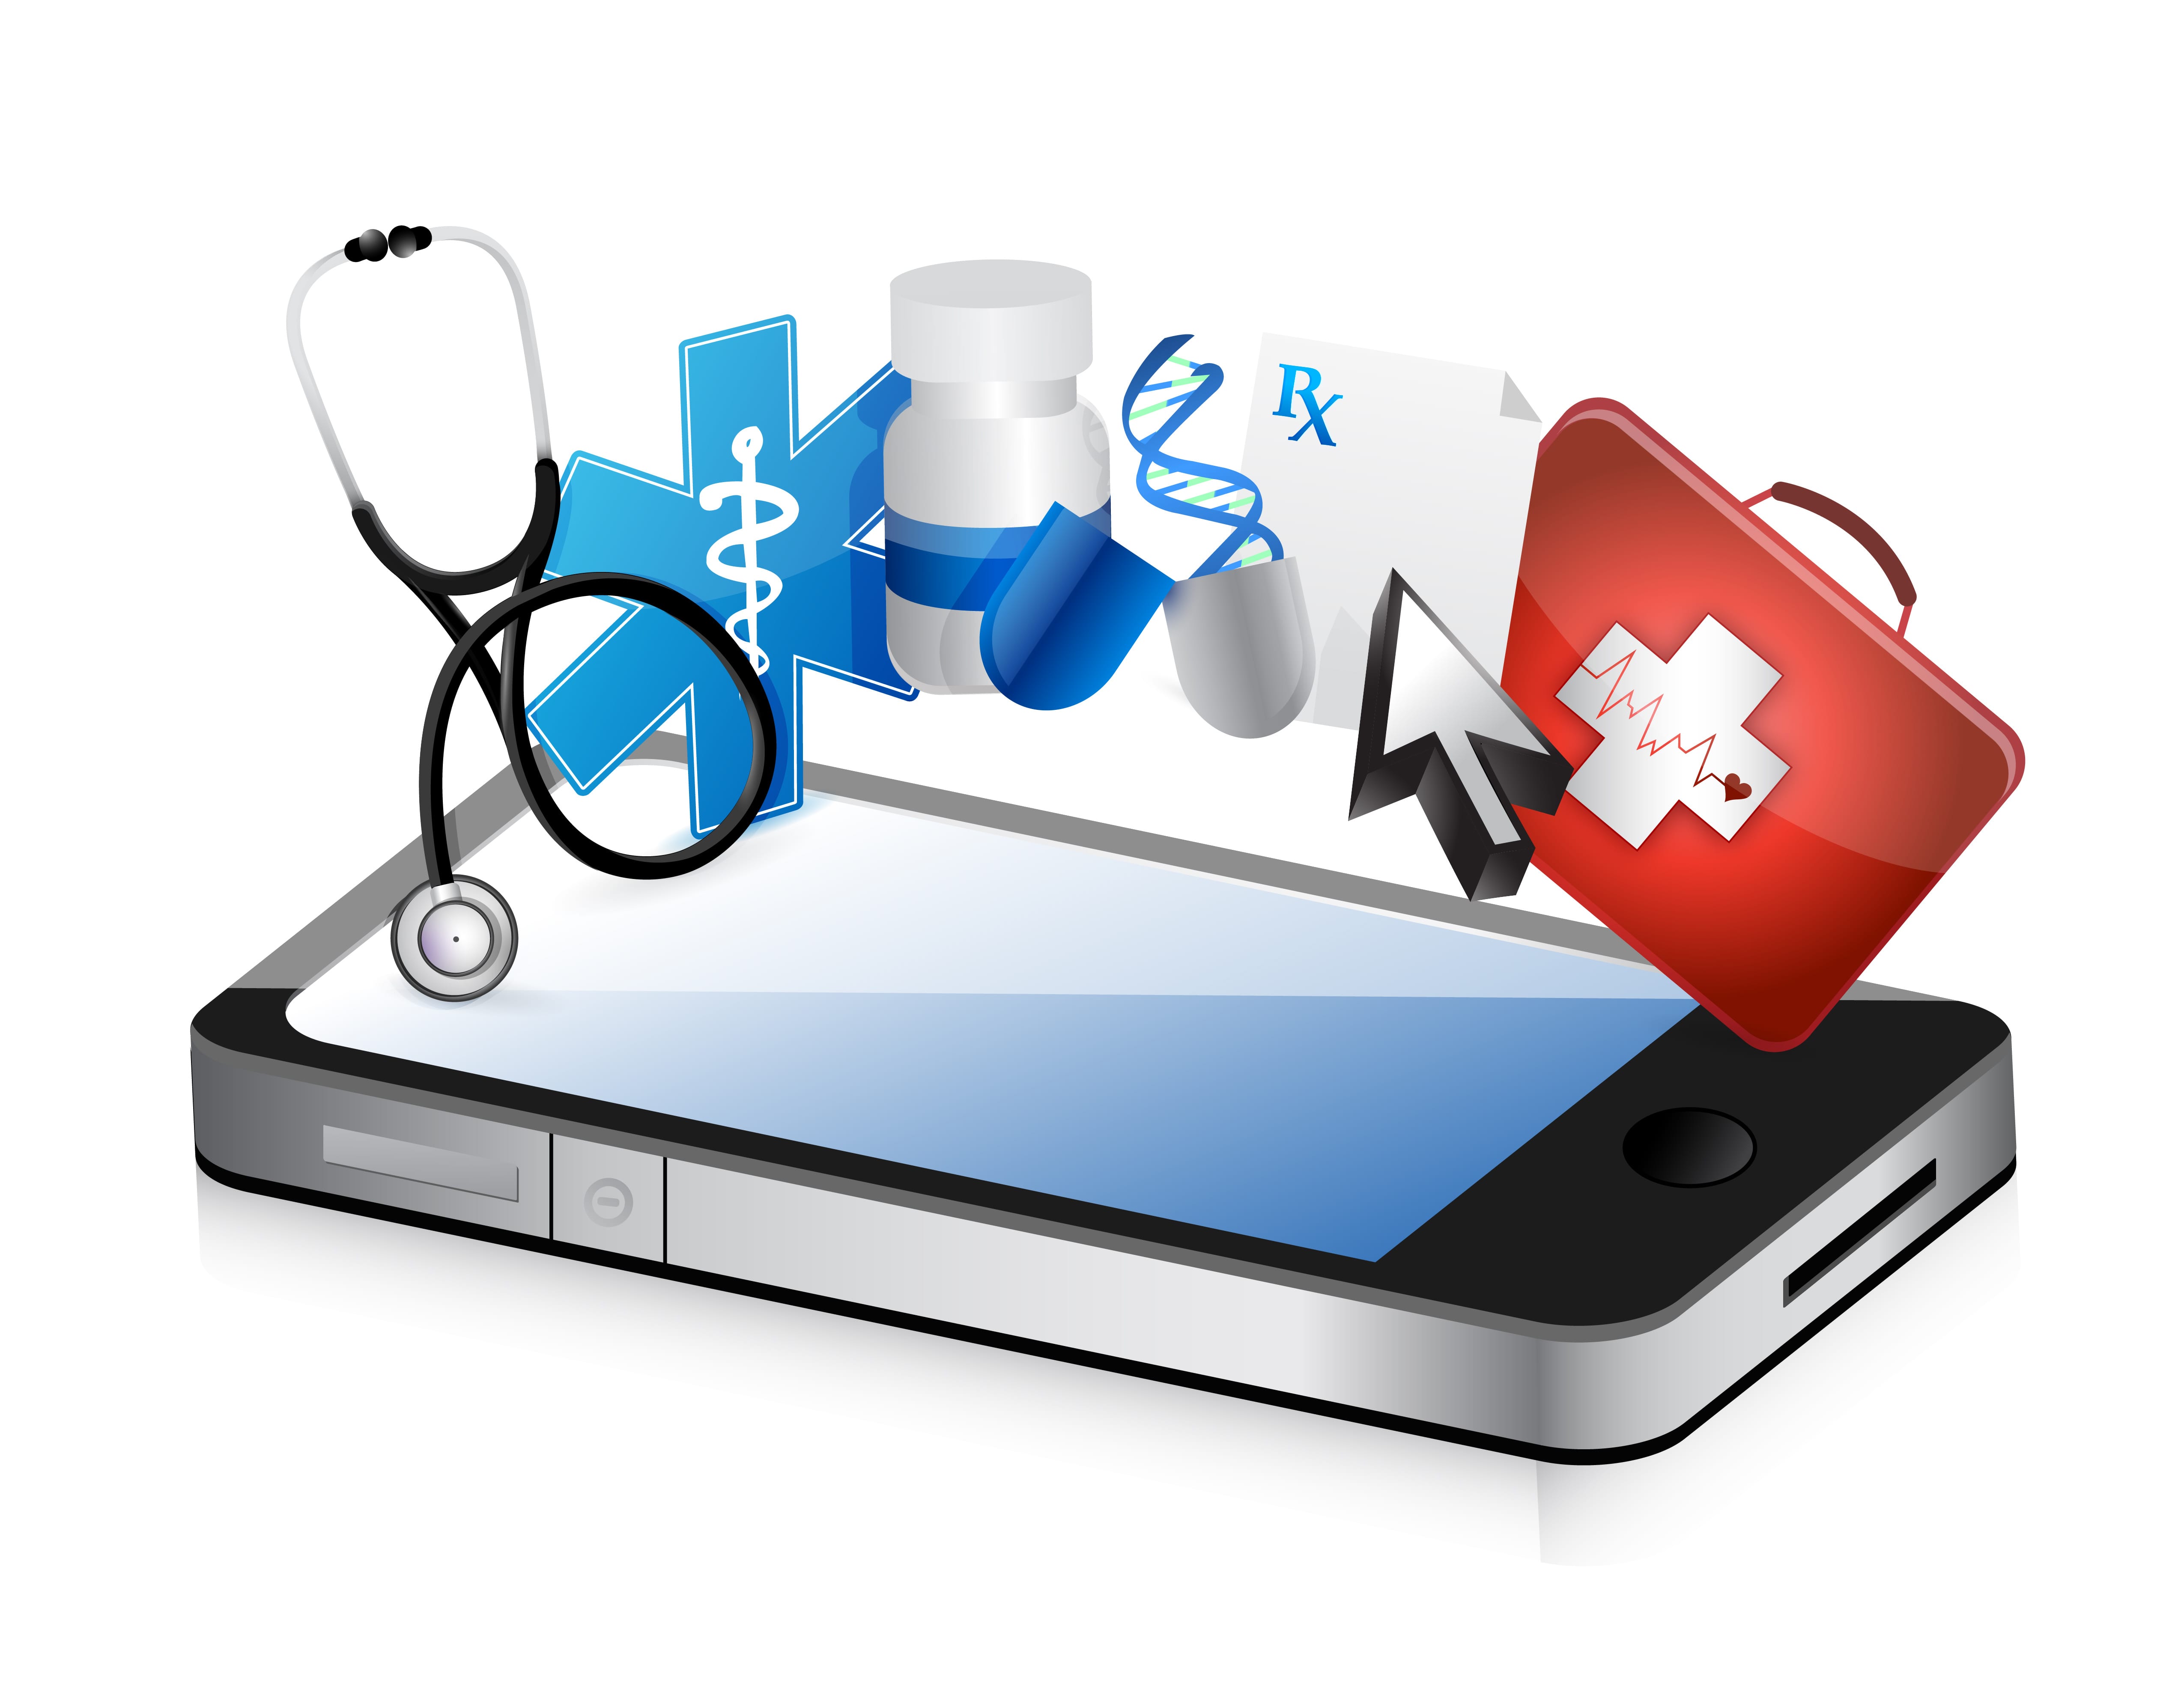 Mobile device support. Мобильное приложение медицина. Мобильные медицинские приложения. Гаджеты в медицине. Мобильные устройства в медицине.